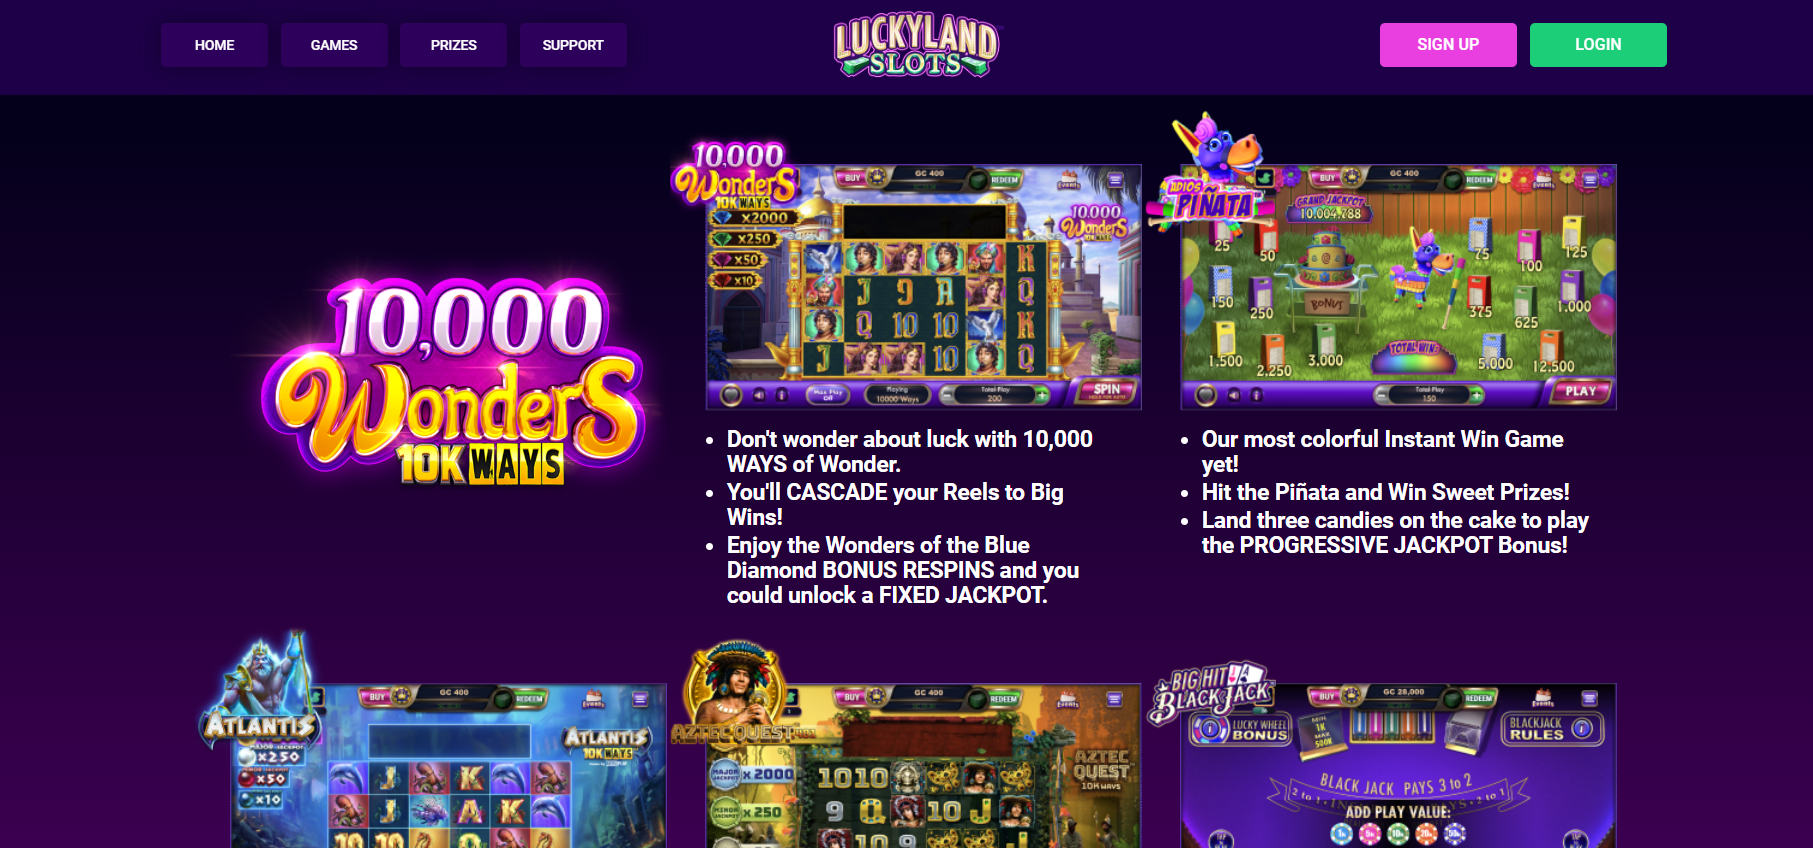 Luckyland welcome bonus